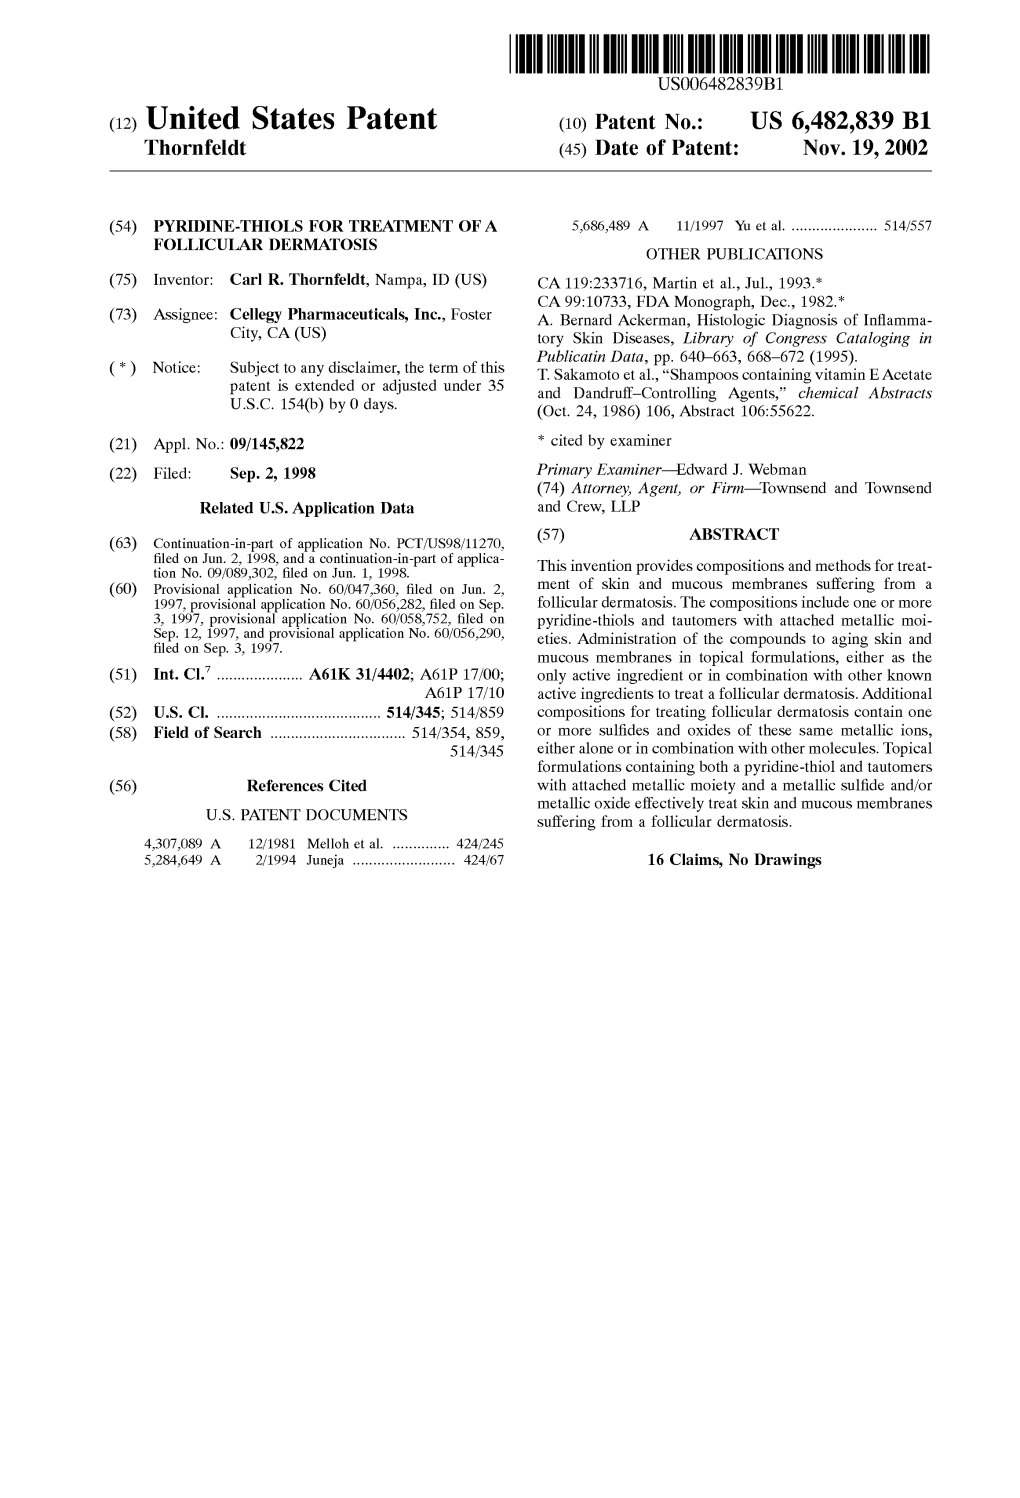 United States Patent (10) Patent N0.: US 6,482,839 B1 Thornfeldt (45) Date of Patent: Nov